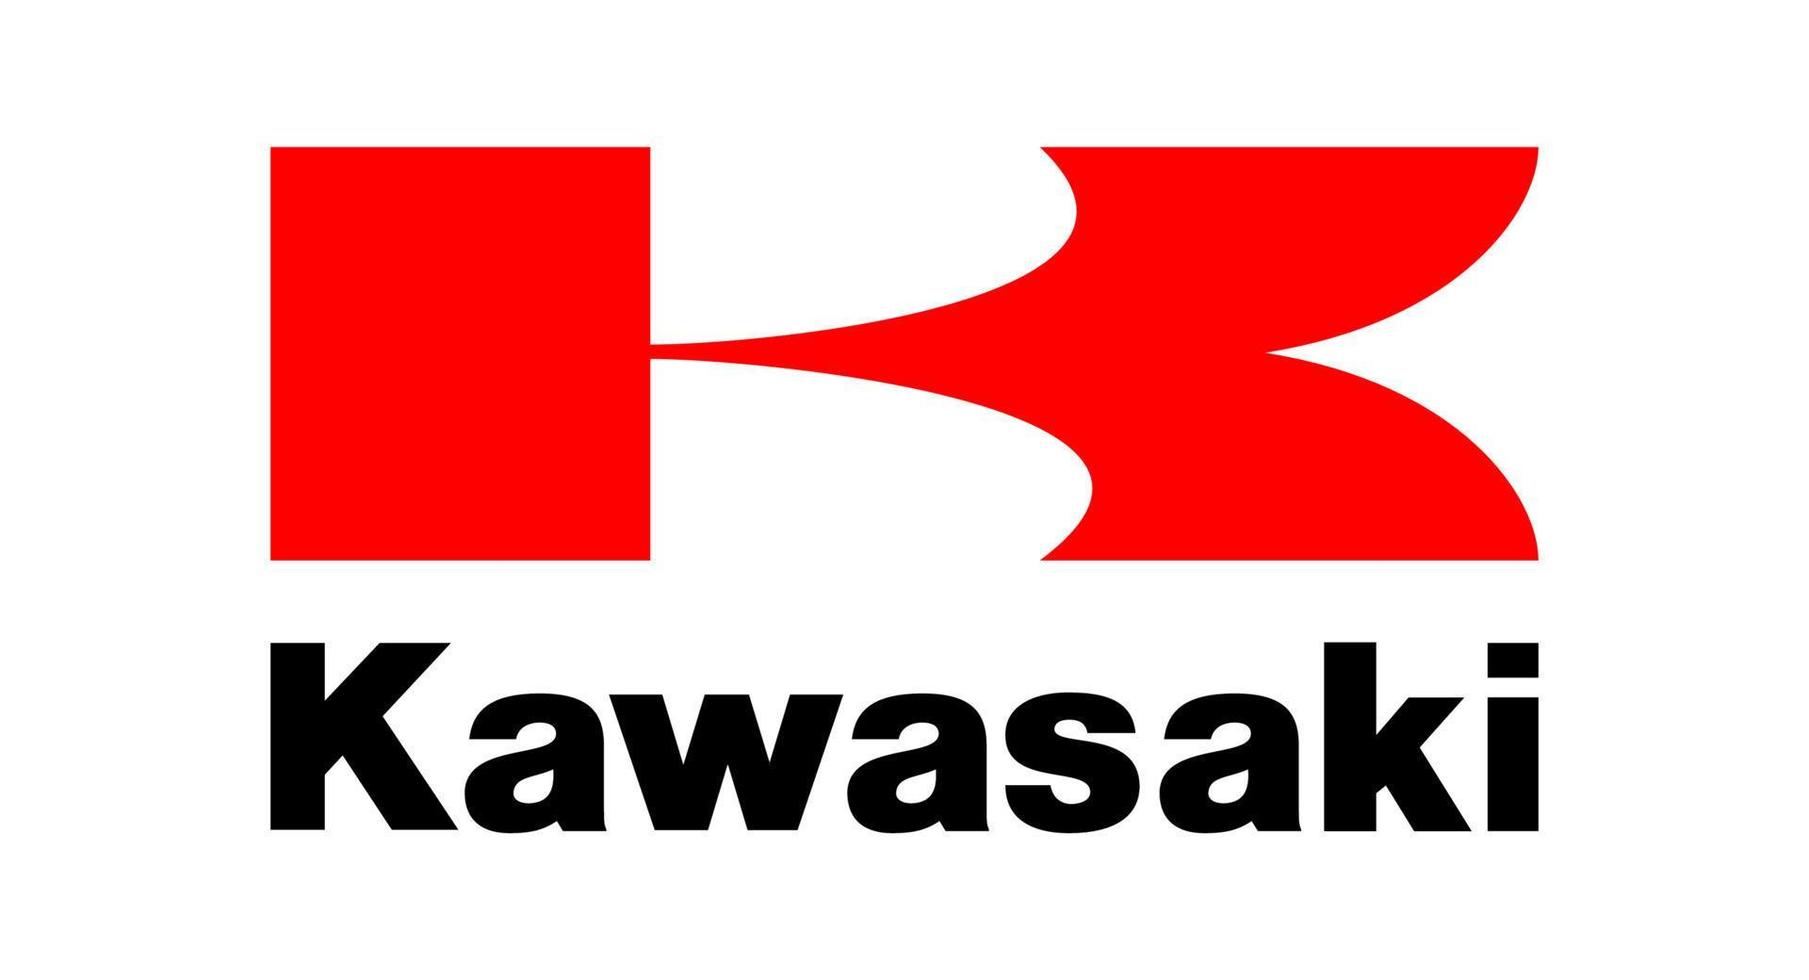 kawasaki logo vector, kawasaki icon free vector